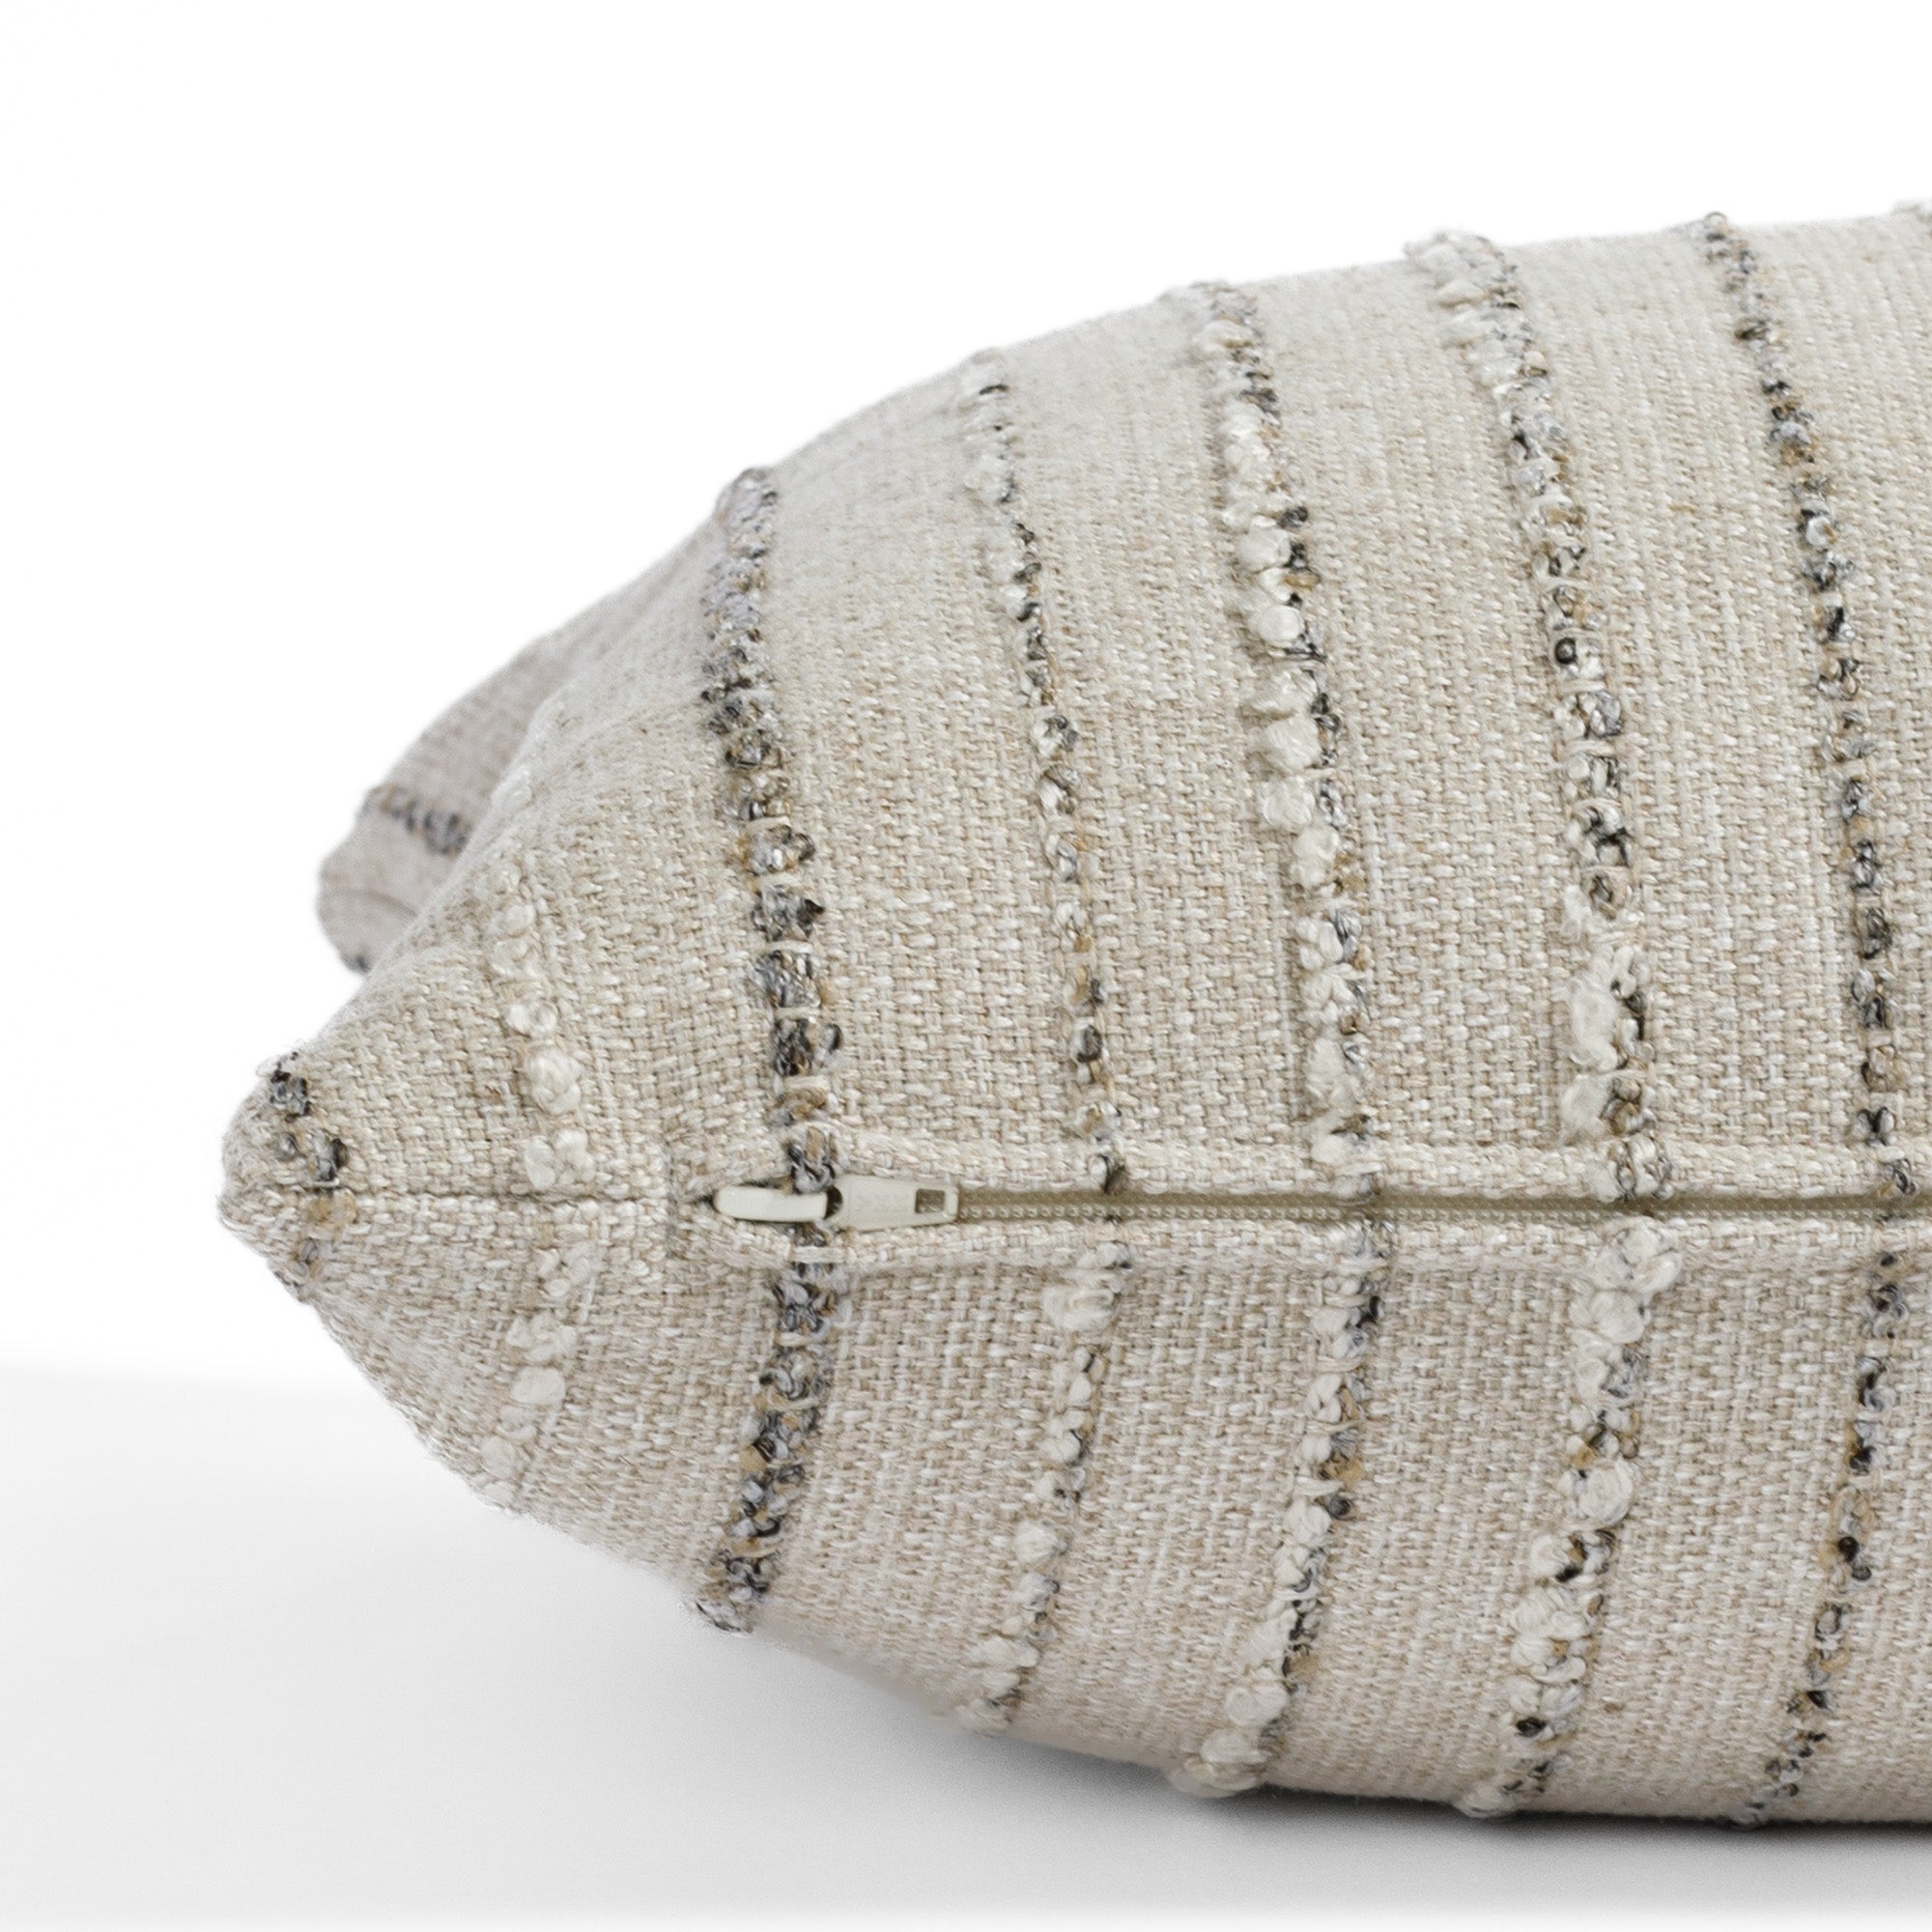 a neutral earth toned striped extra long lumbar pillow : close up zipper detail